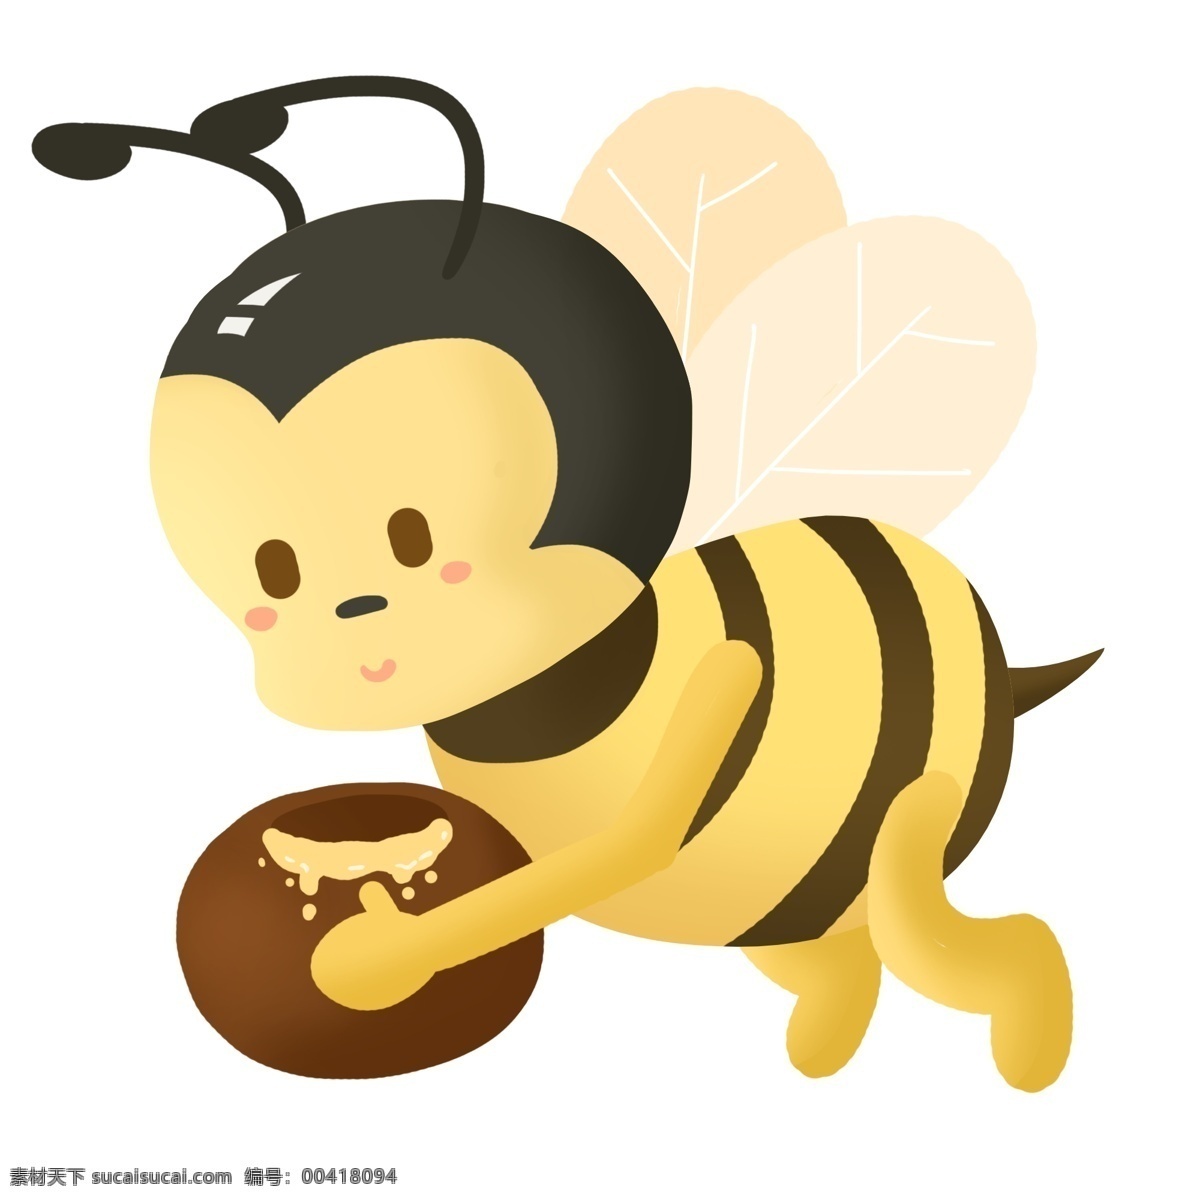 q 版 蜜蜂 免 抠 卡通蜜蜂 q版 萌系 可爱 儿童画 花蜜 采花蜜 翅膀鲜艳 原创手绘 飞翔 蜂蜜 蜜罐